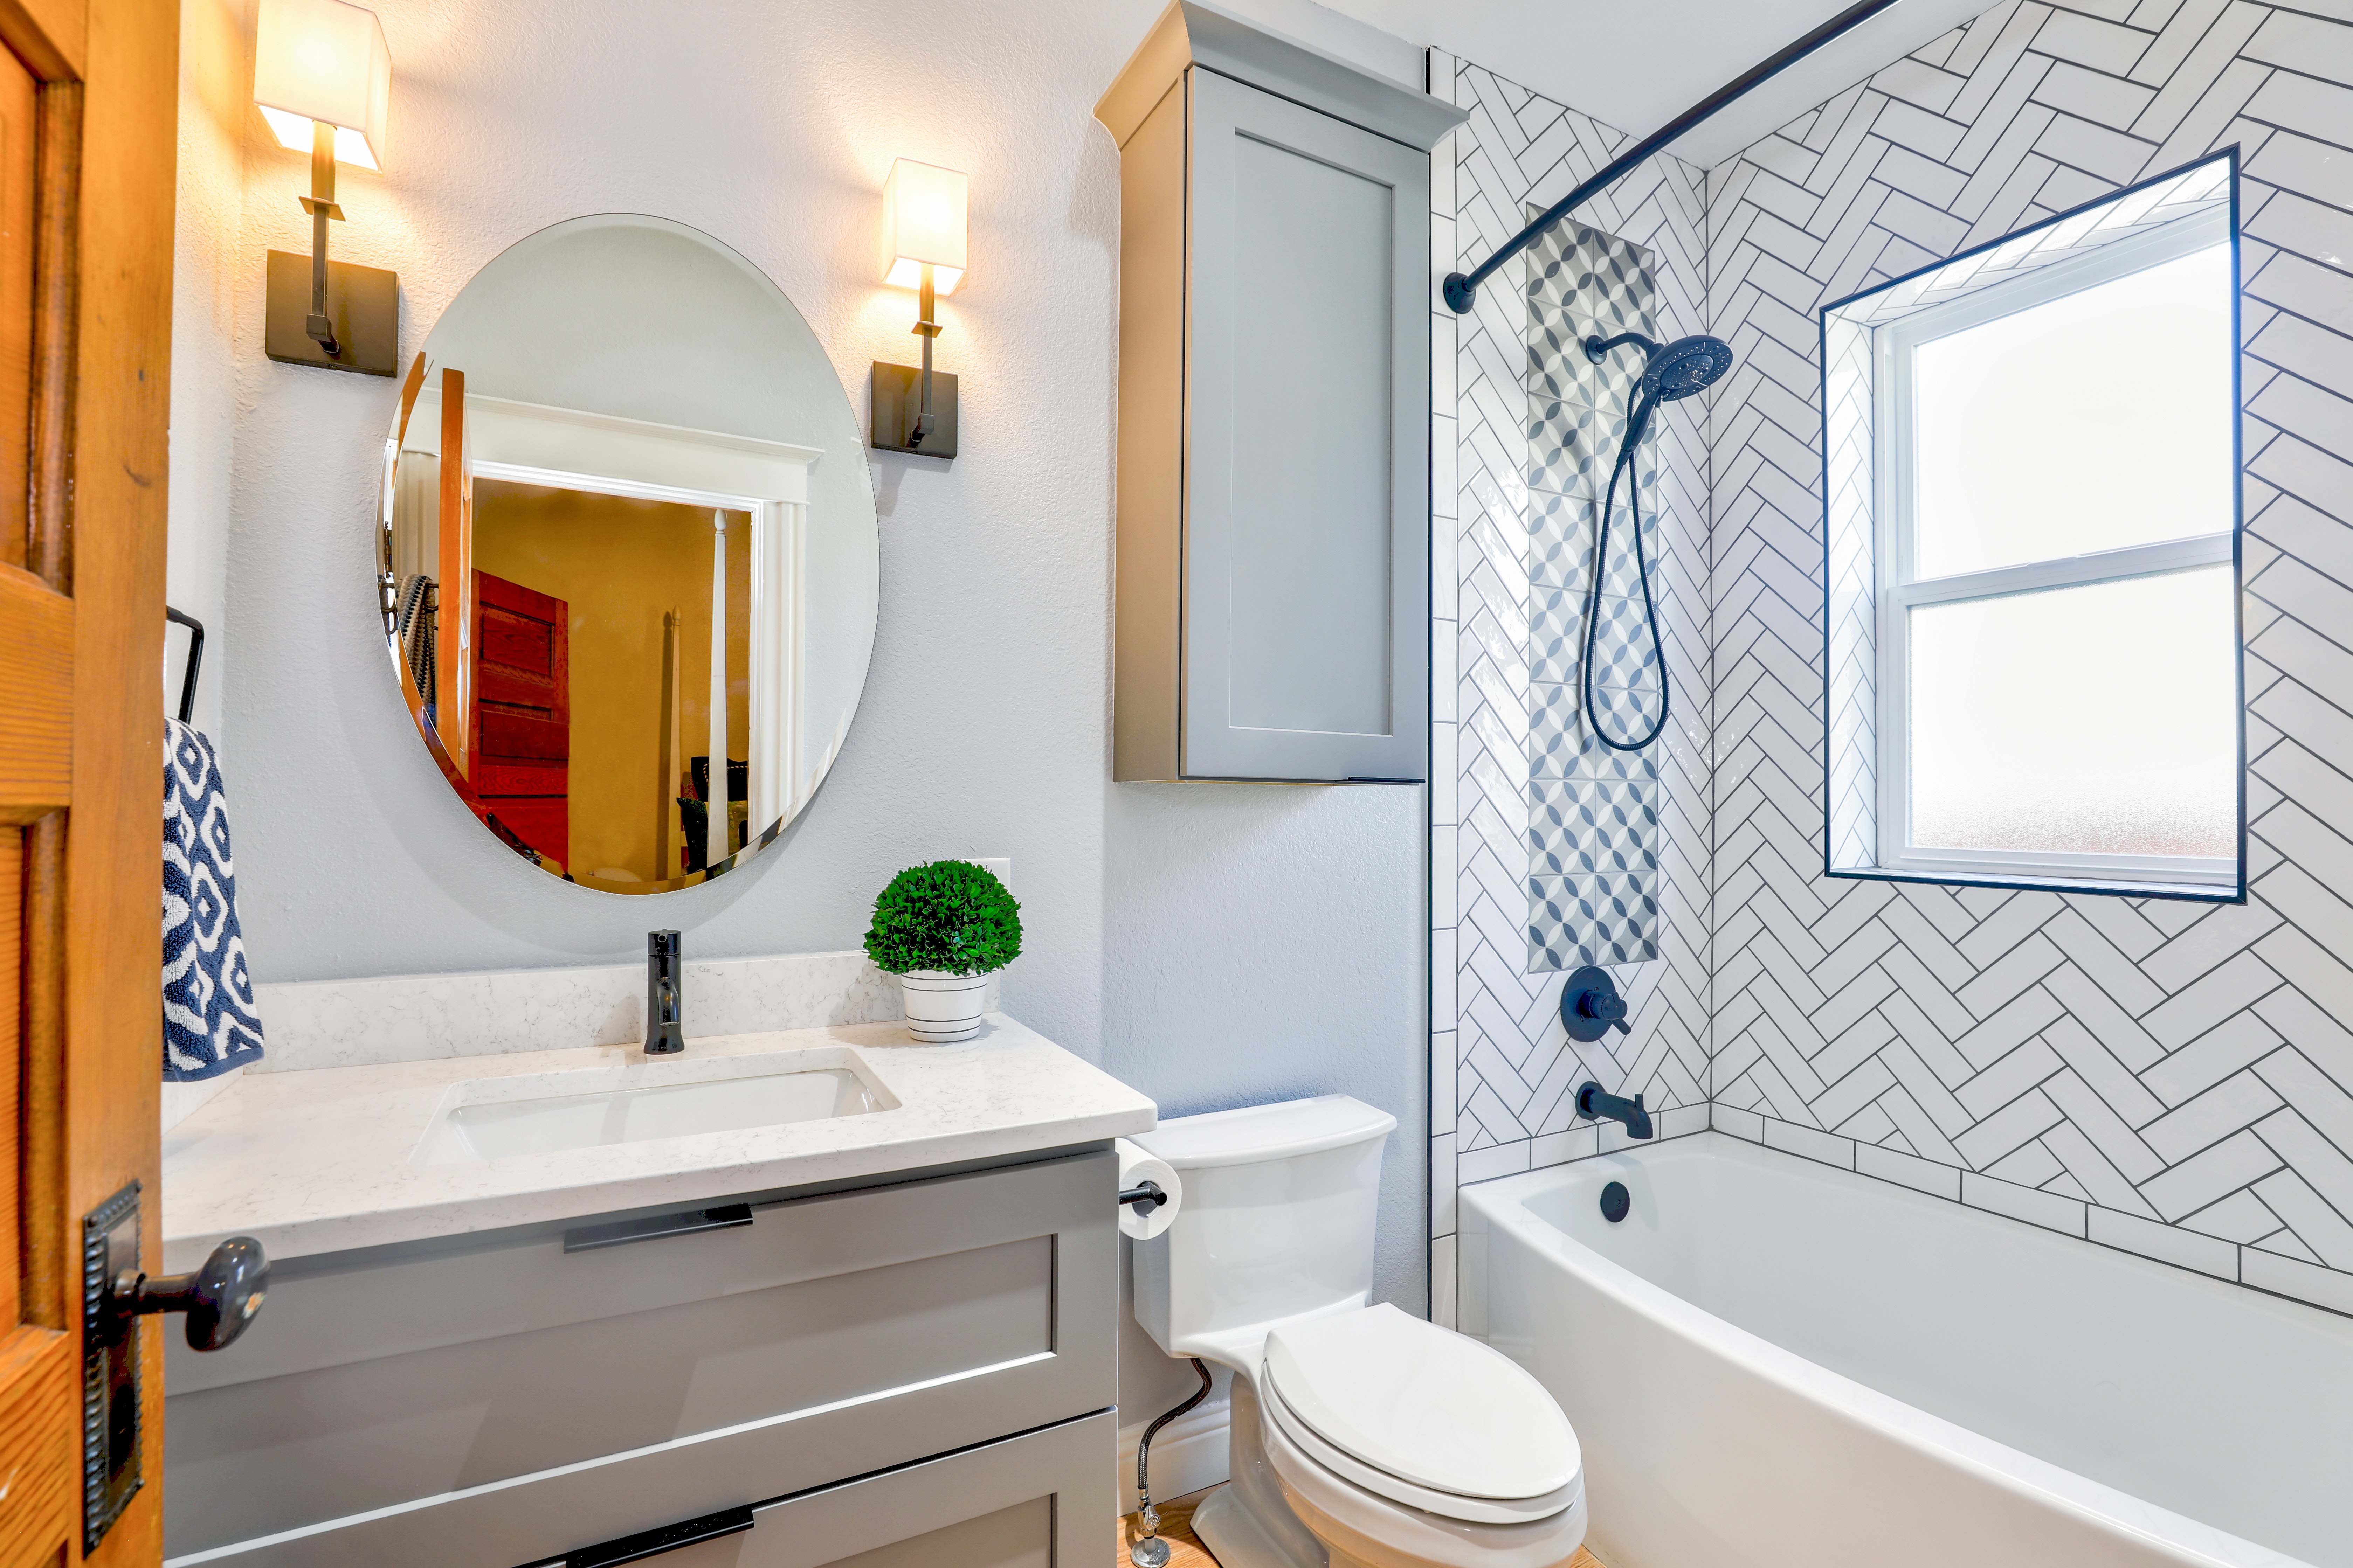 Bathroom budget remodel rennovations ideas 2020